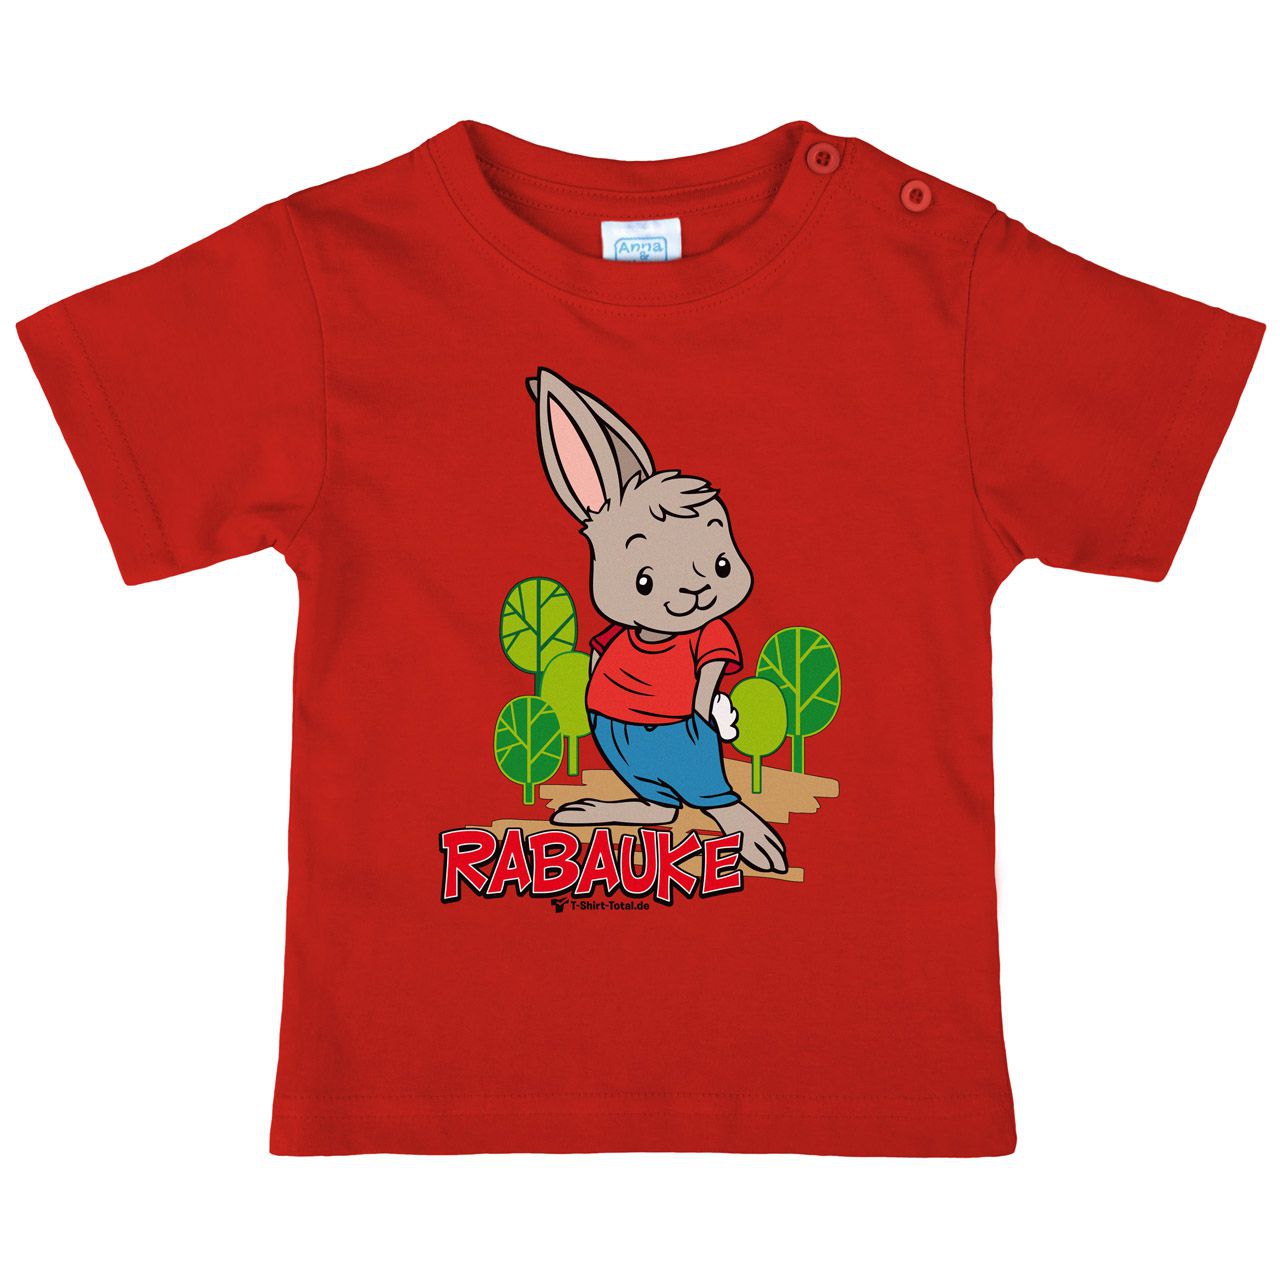 Rabauke Kinder T-Shirt rot 110 / 116